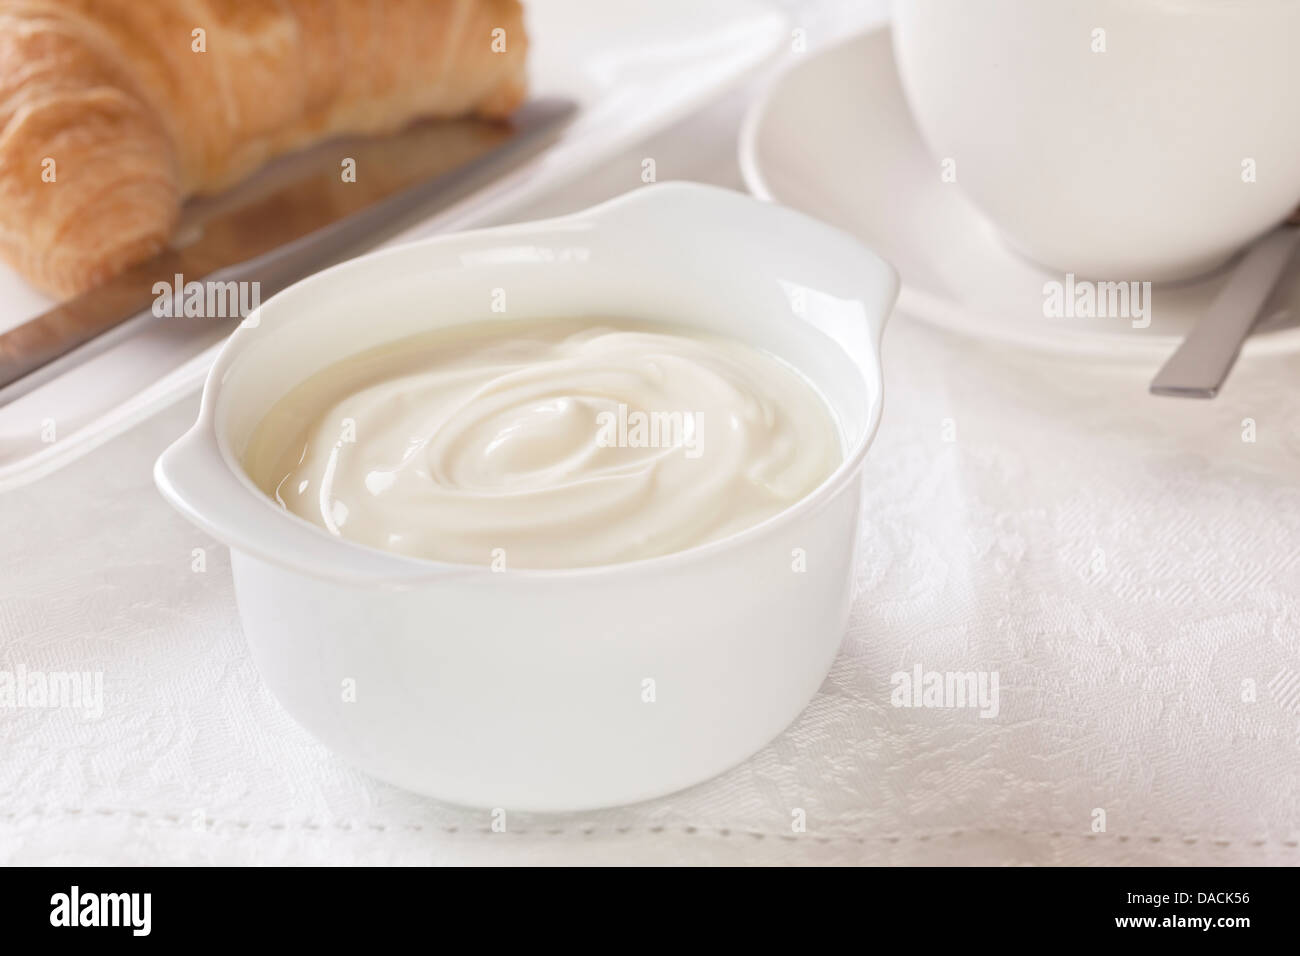 Joghurt Frühstück - Schüssel mit Joghurt zum Frühstück mit Kaffee und Croissant. Stockfoto